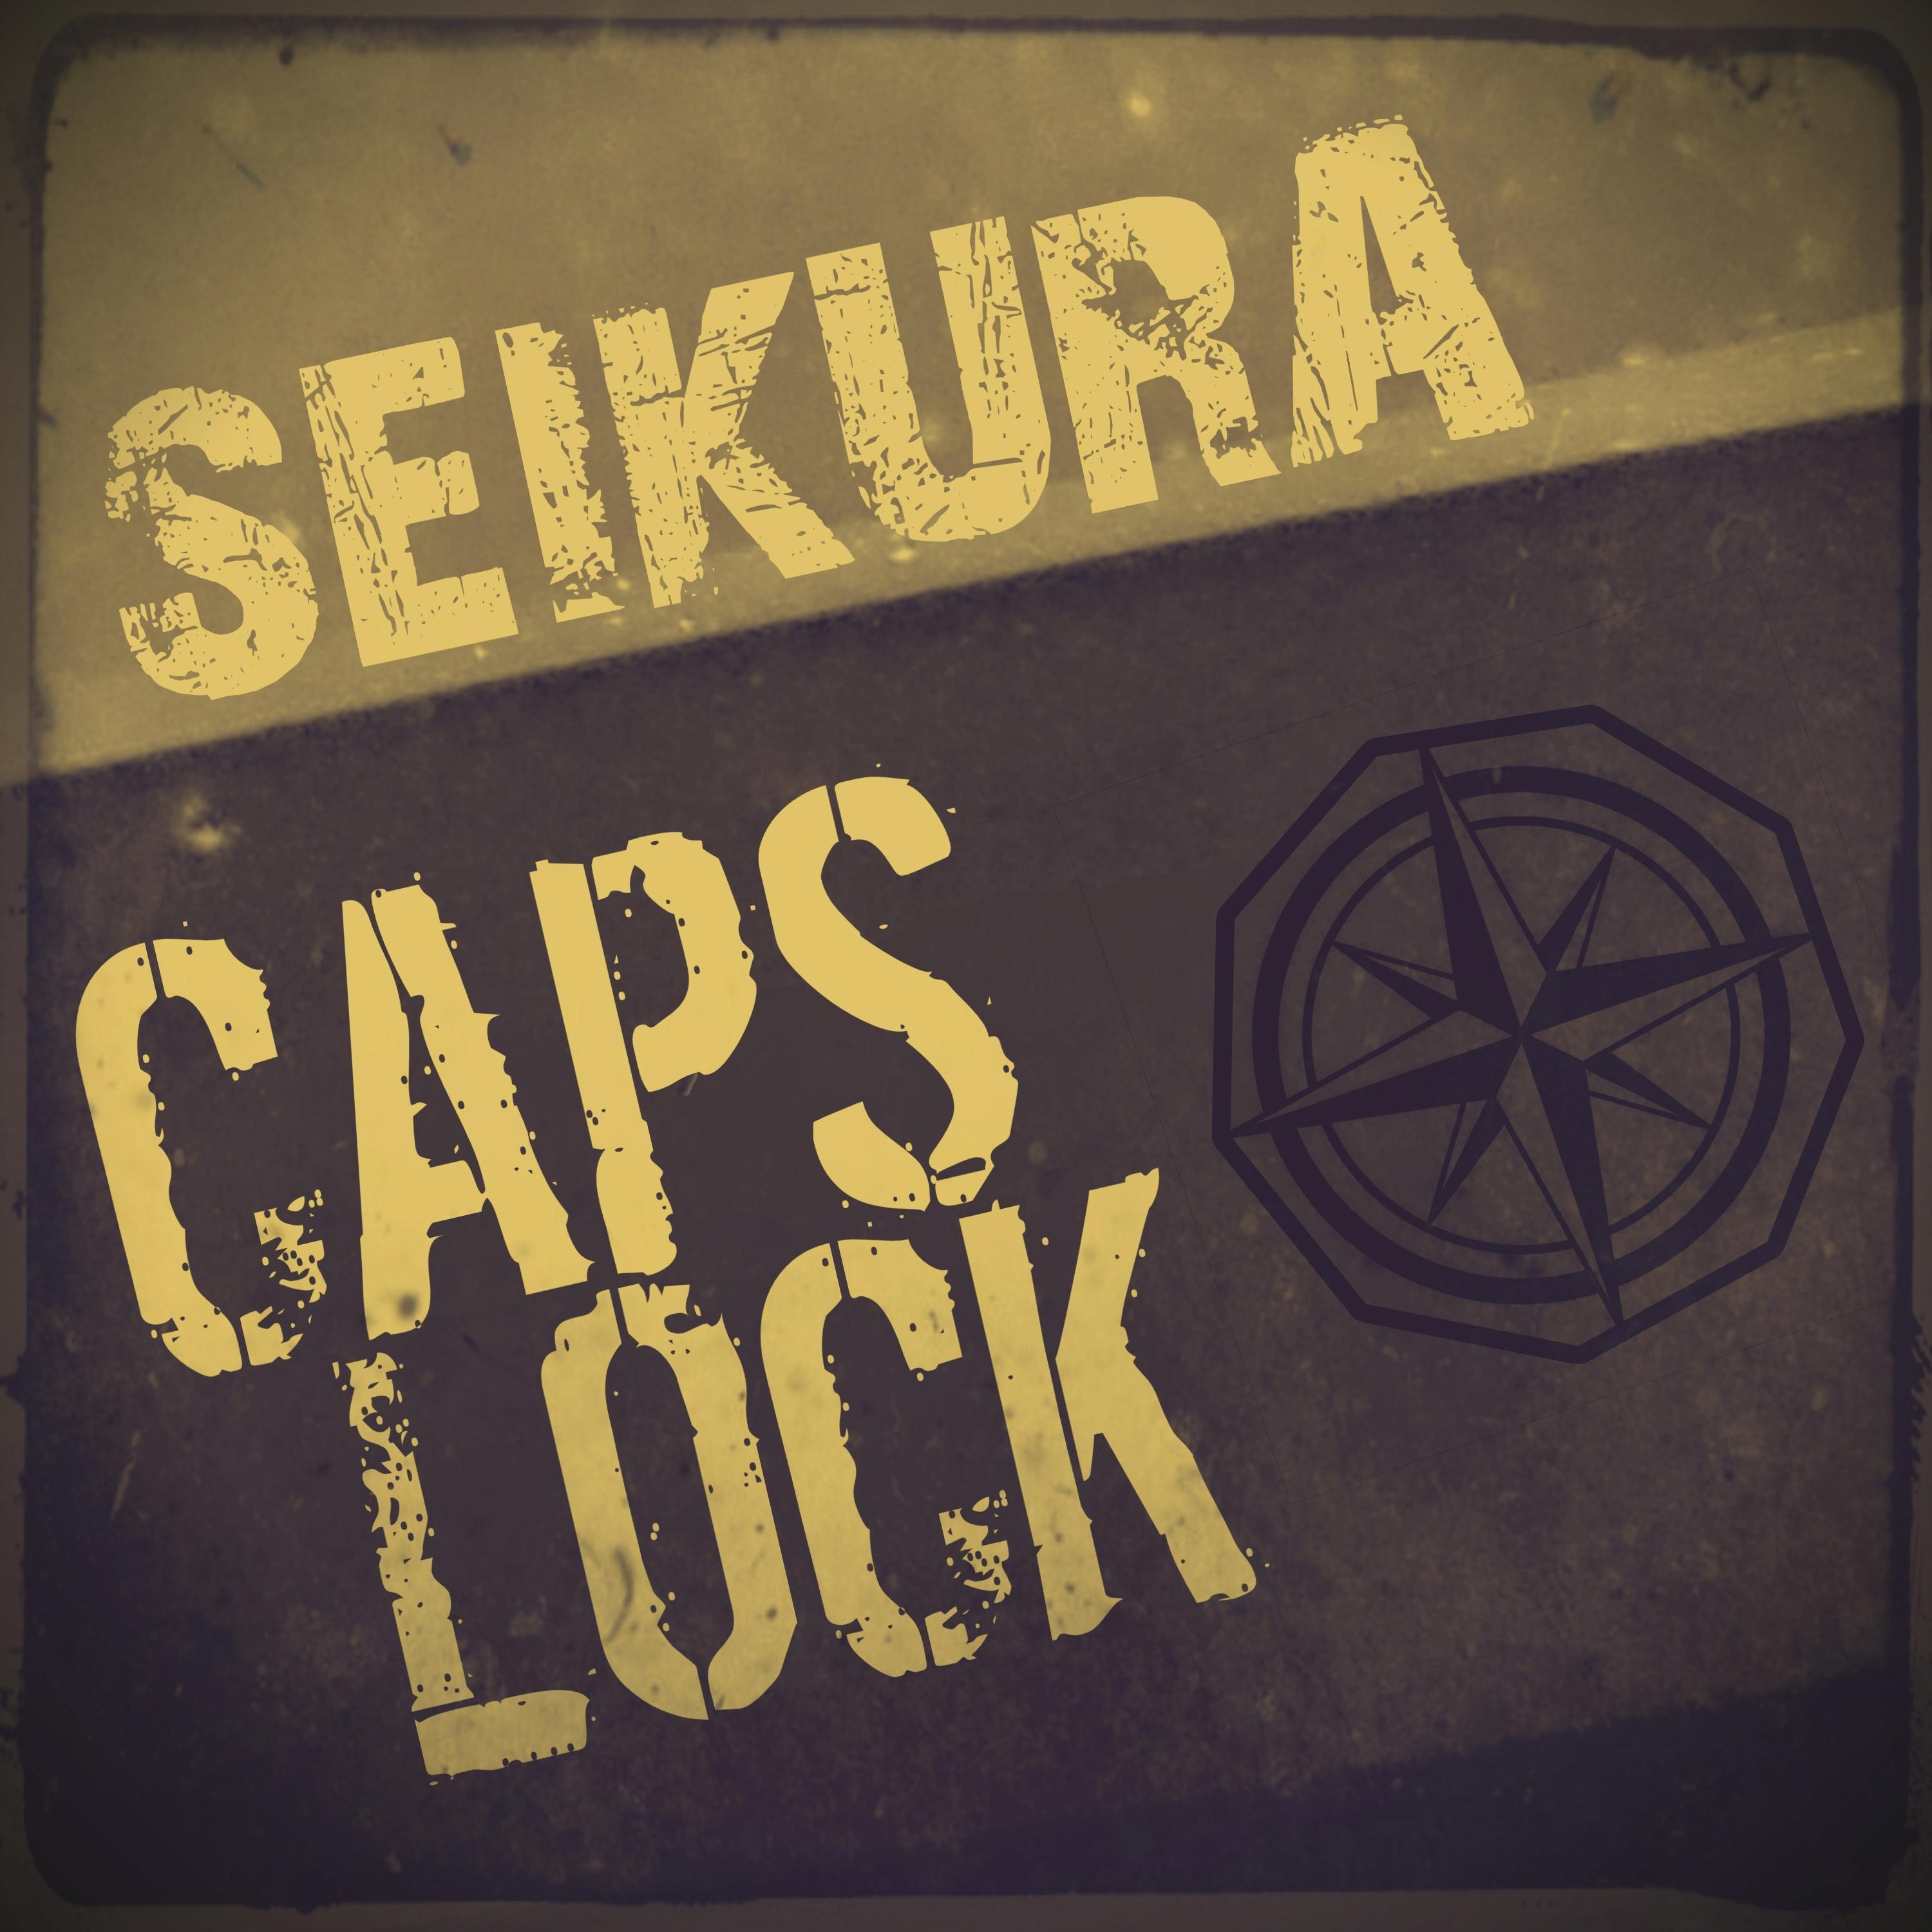 Seikura - CAPS LOCK (feat. M'Keey, Klein, Mannen Med Yoen, Loka Brazi, bVg, Paul Bernard, Yaniz & Mygla)